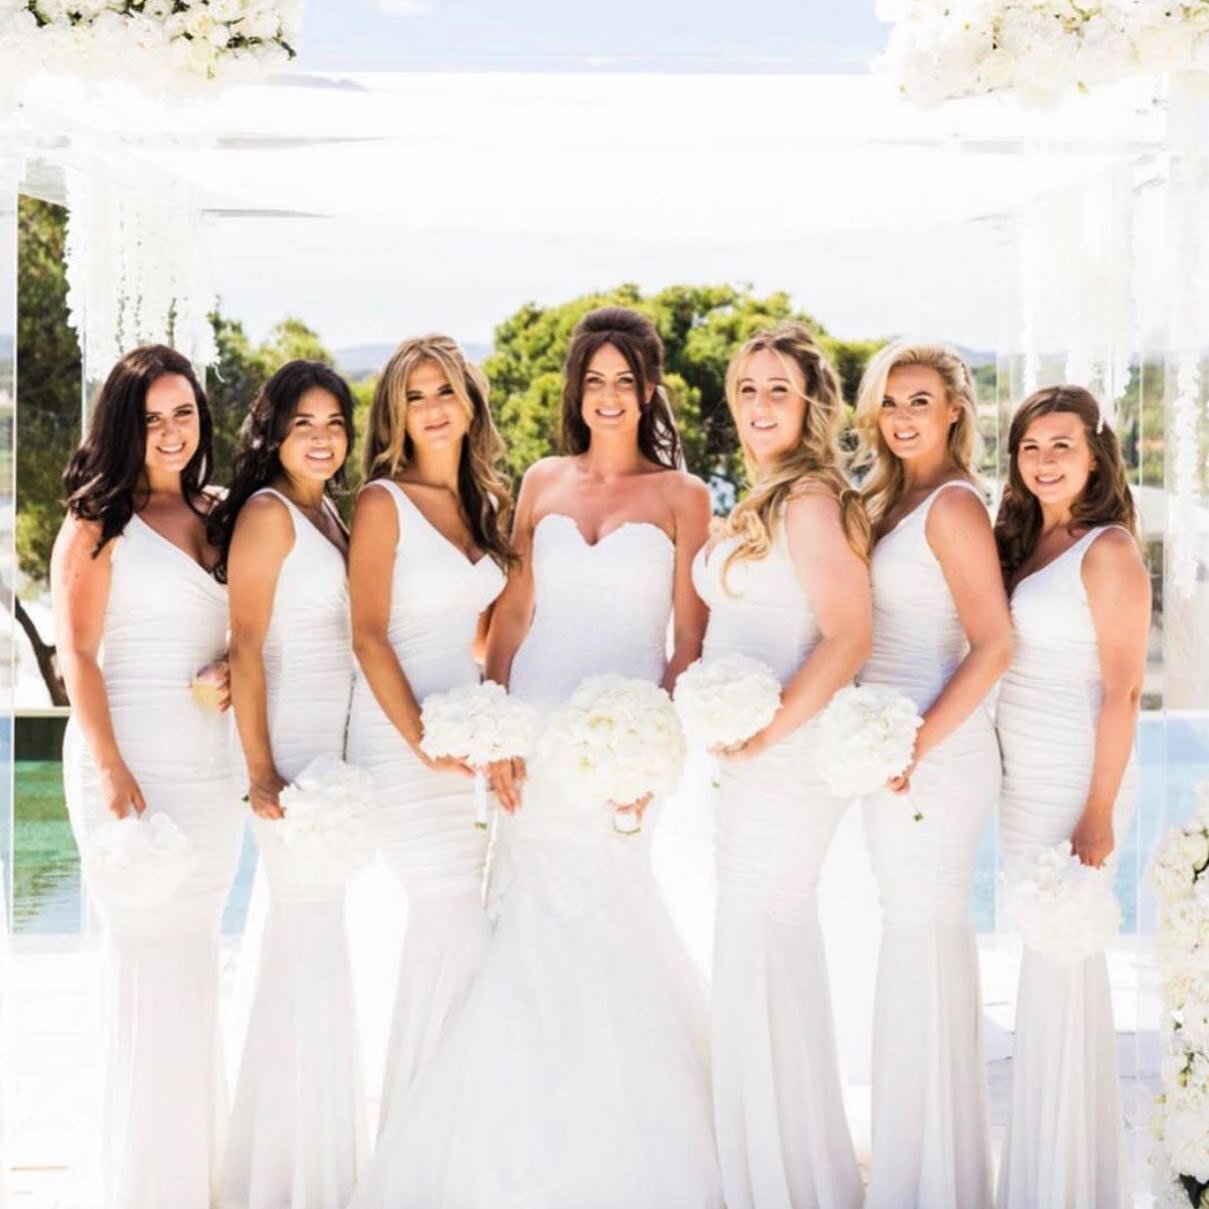 Beautiful bride and her bridesmaids 😍❤️ #Portugal #blendmakeuplondon #blendbridal #wedding #weddingmakeup #bridemaids